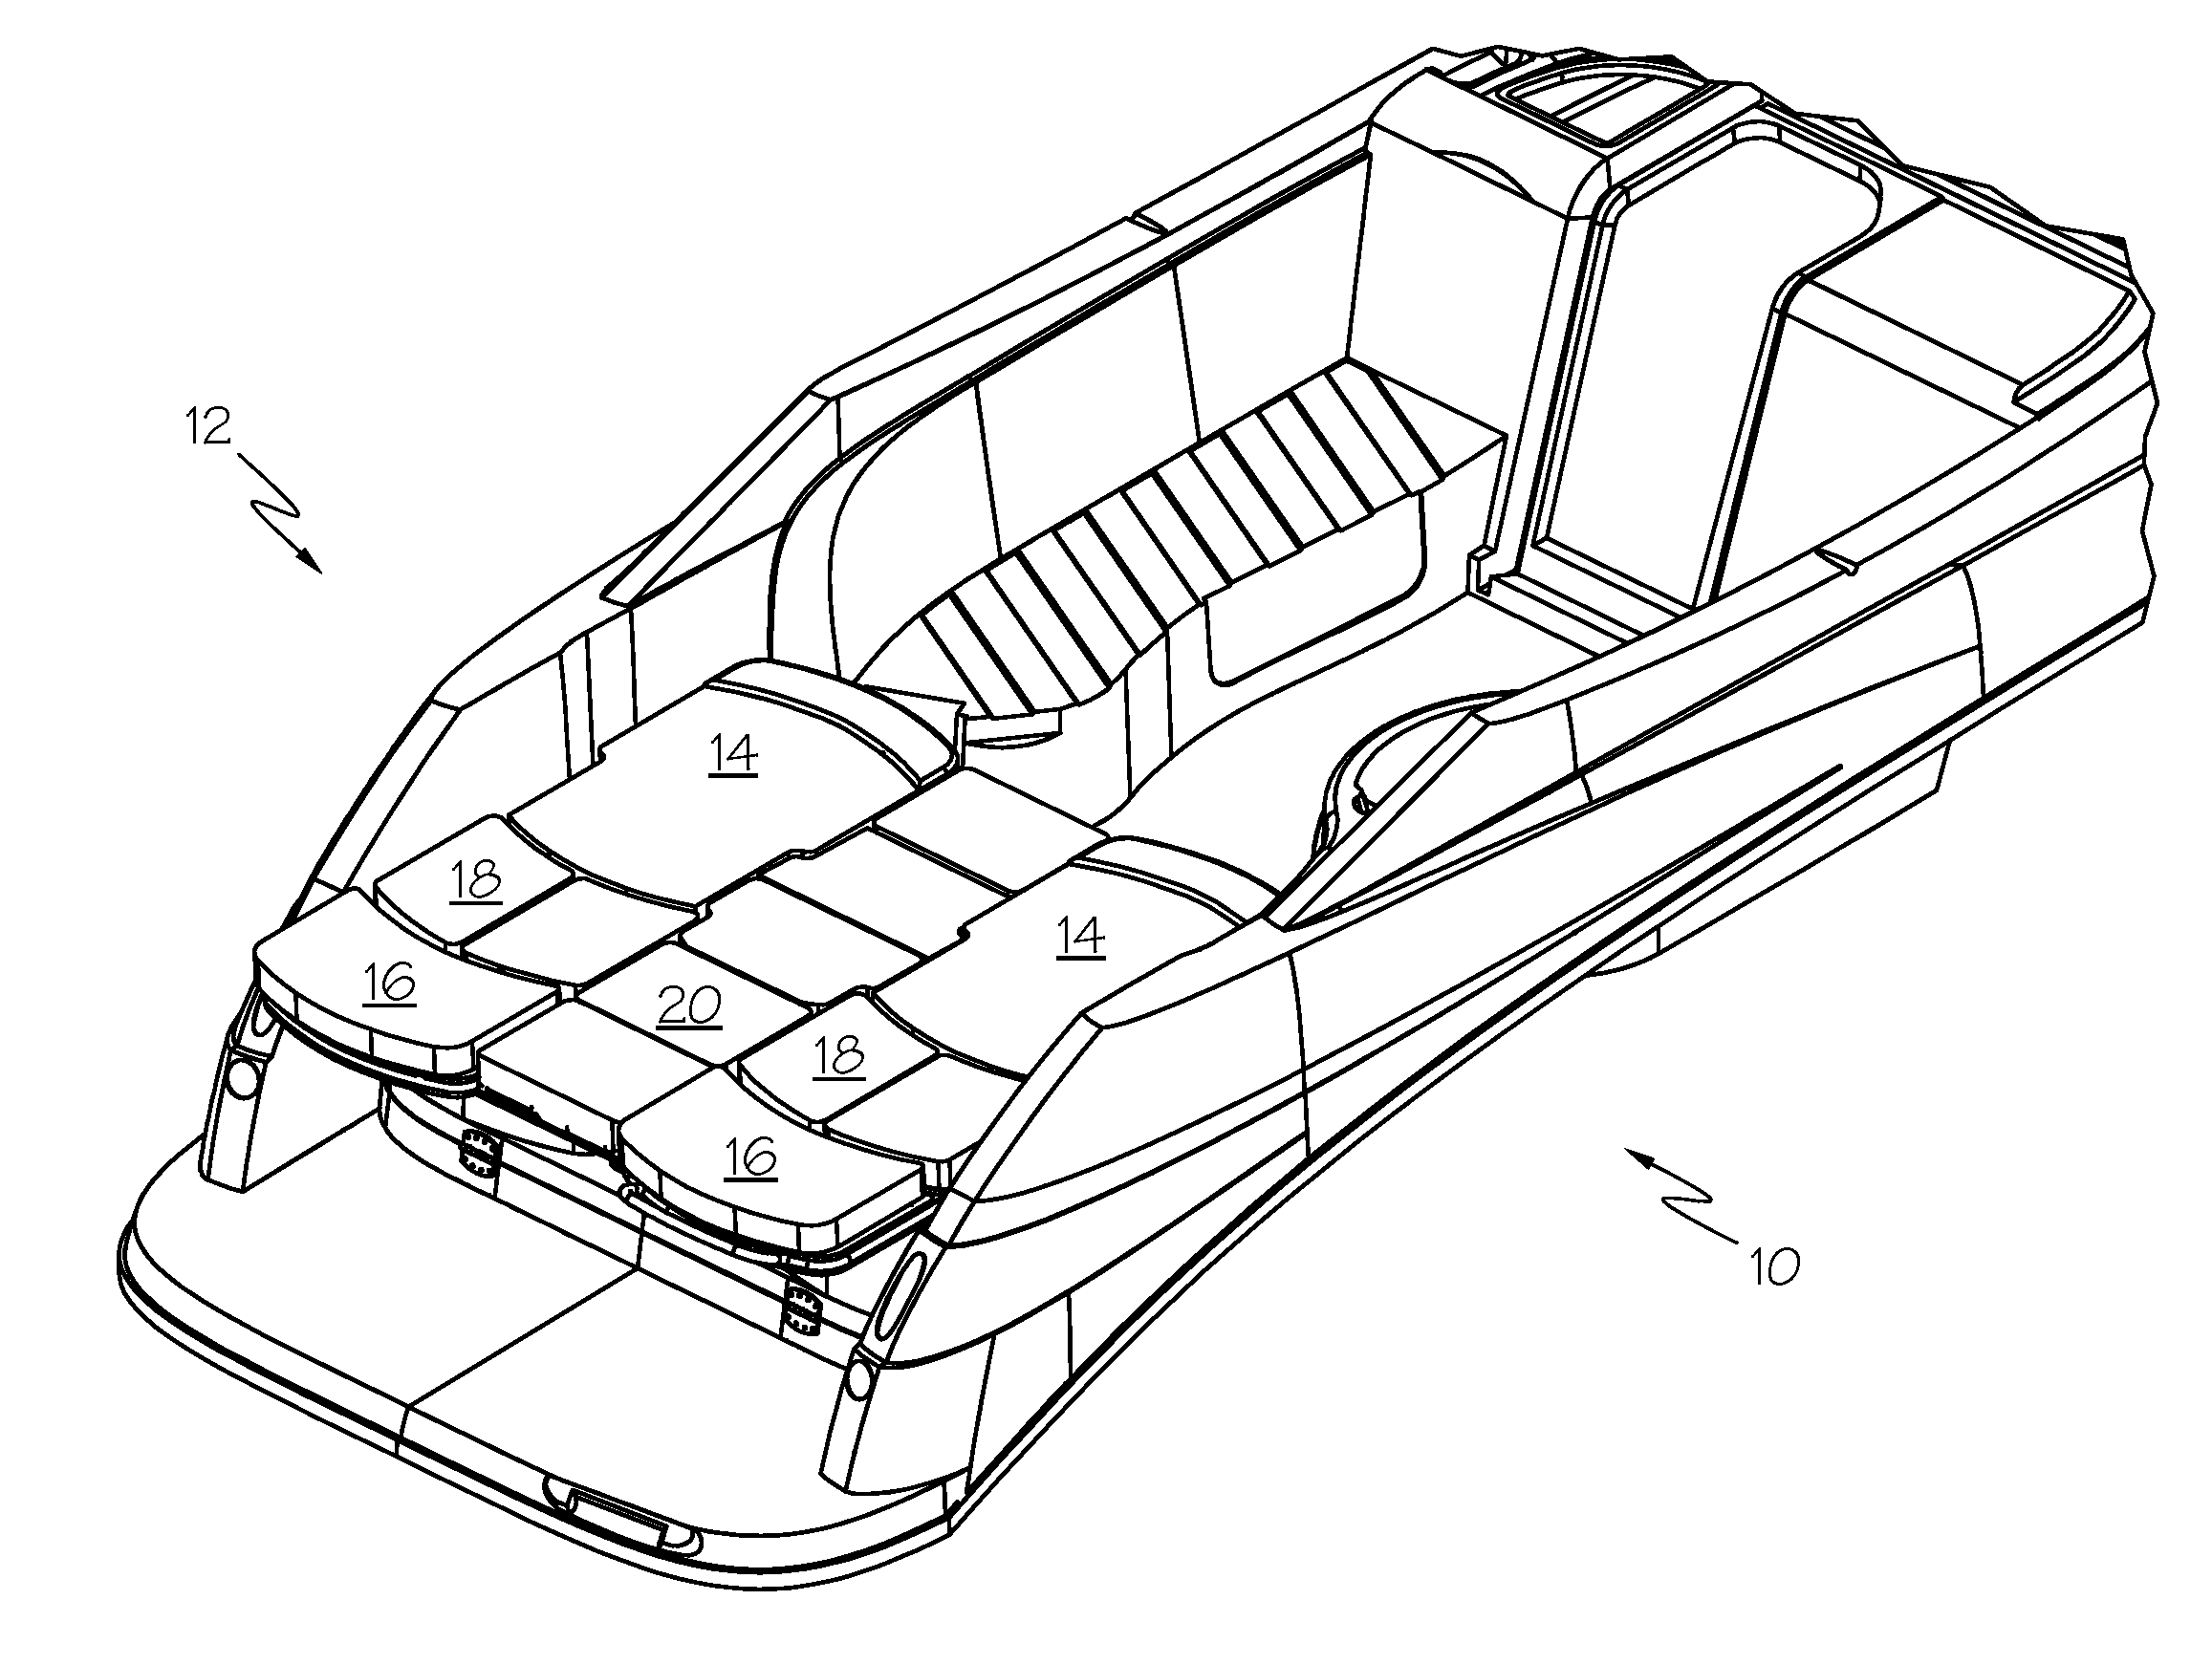 Cruiser split seating system and locking conversion